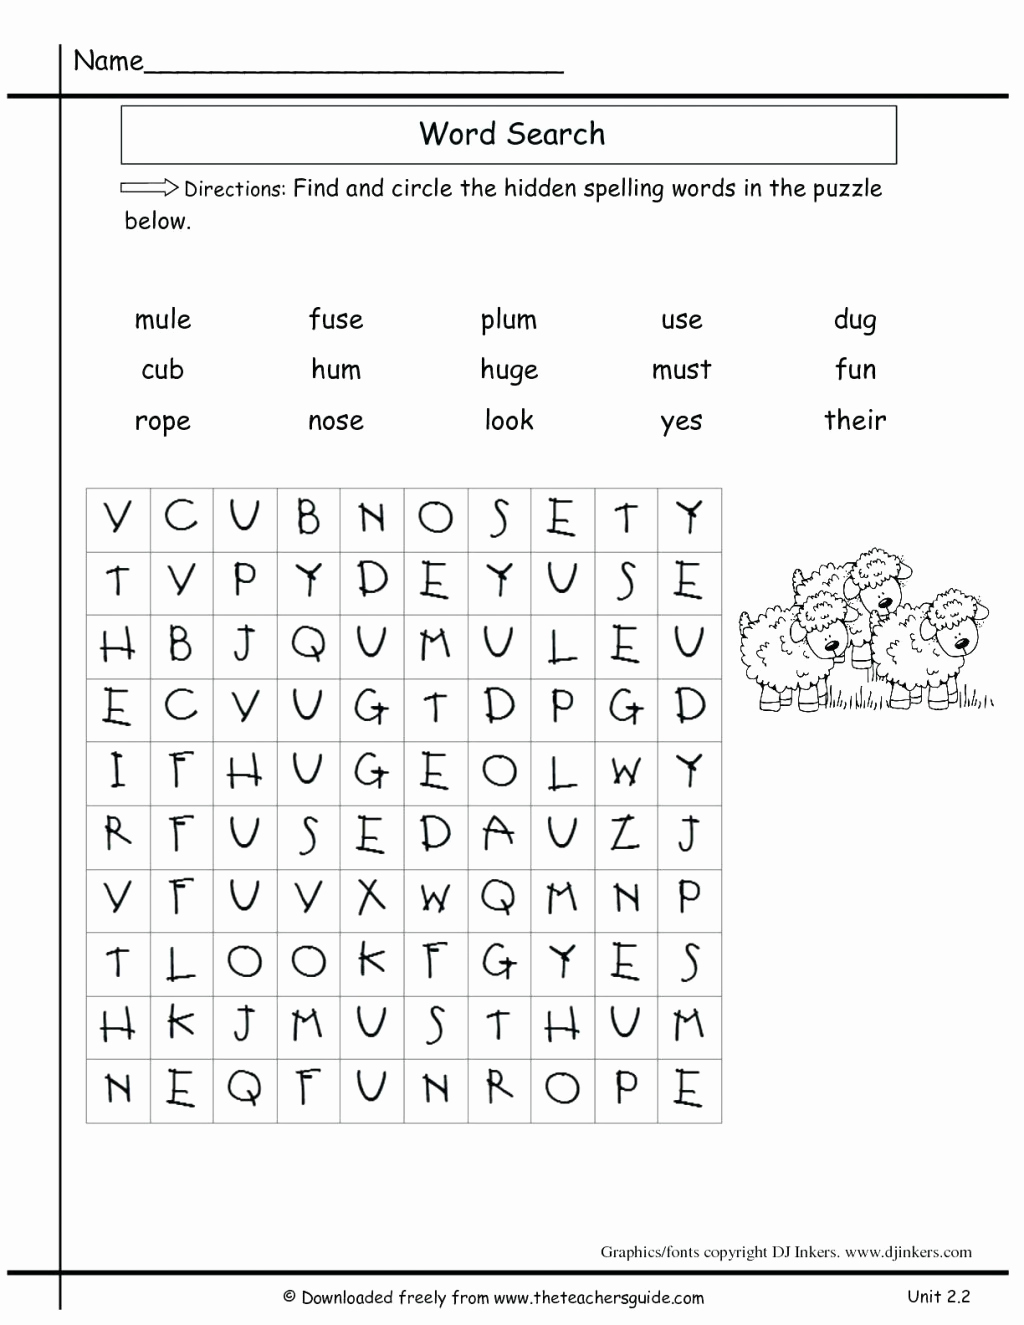 Second Grade Spelling Worksheets Unique 2nd Grade Spelling Worksheets for Printable 2nd Grade